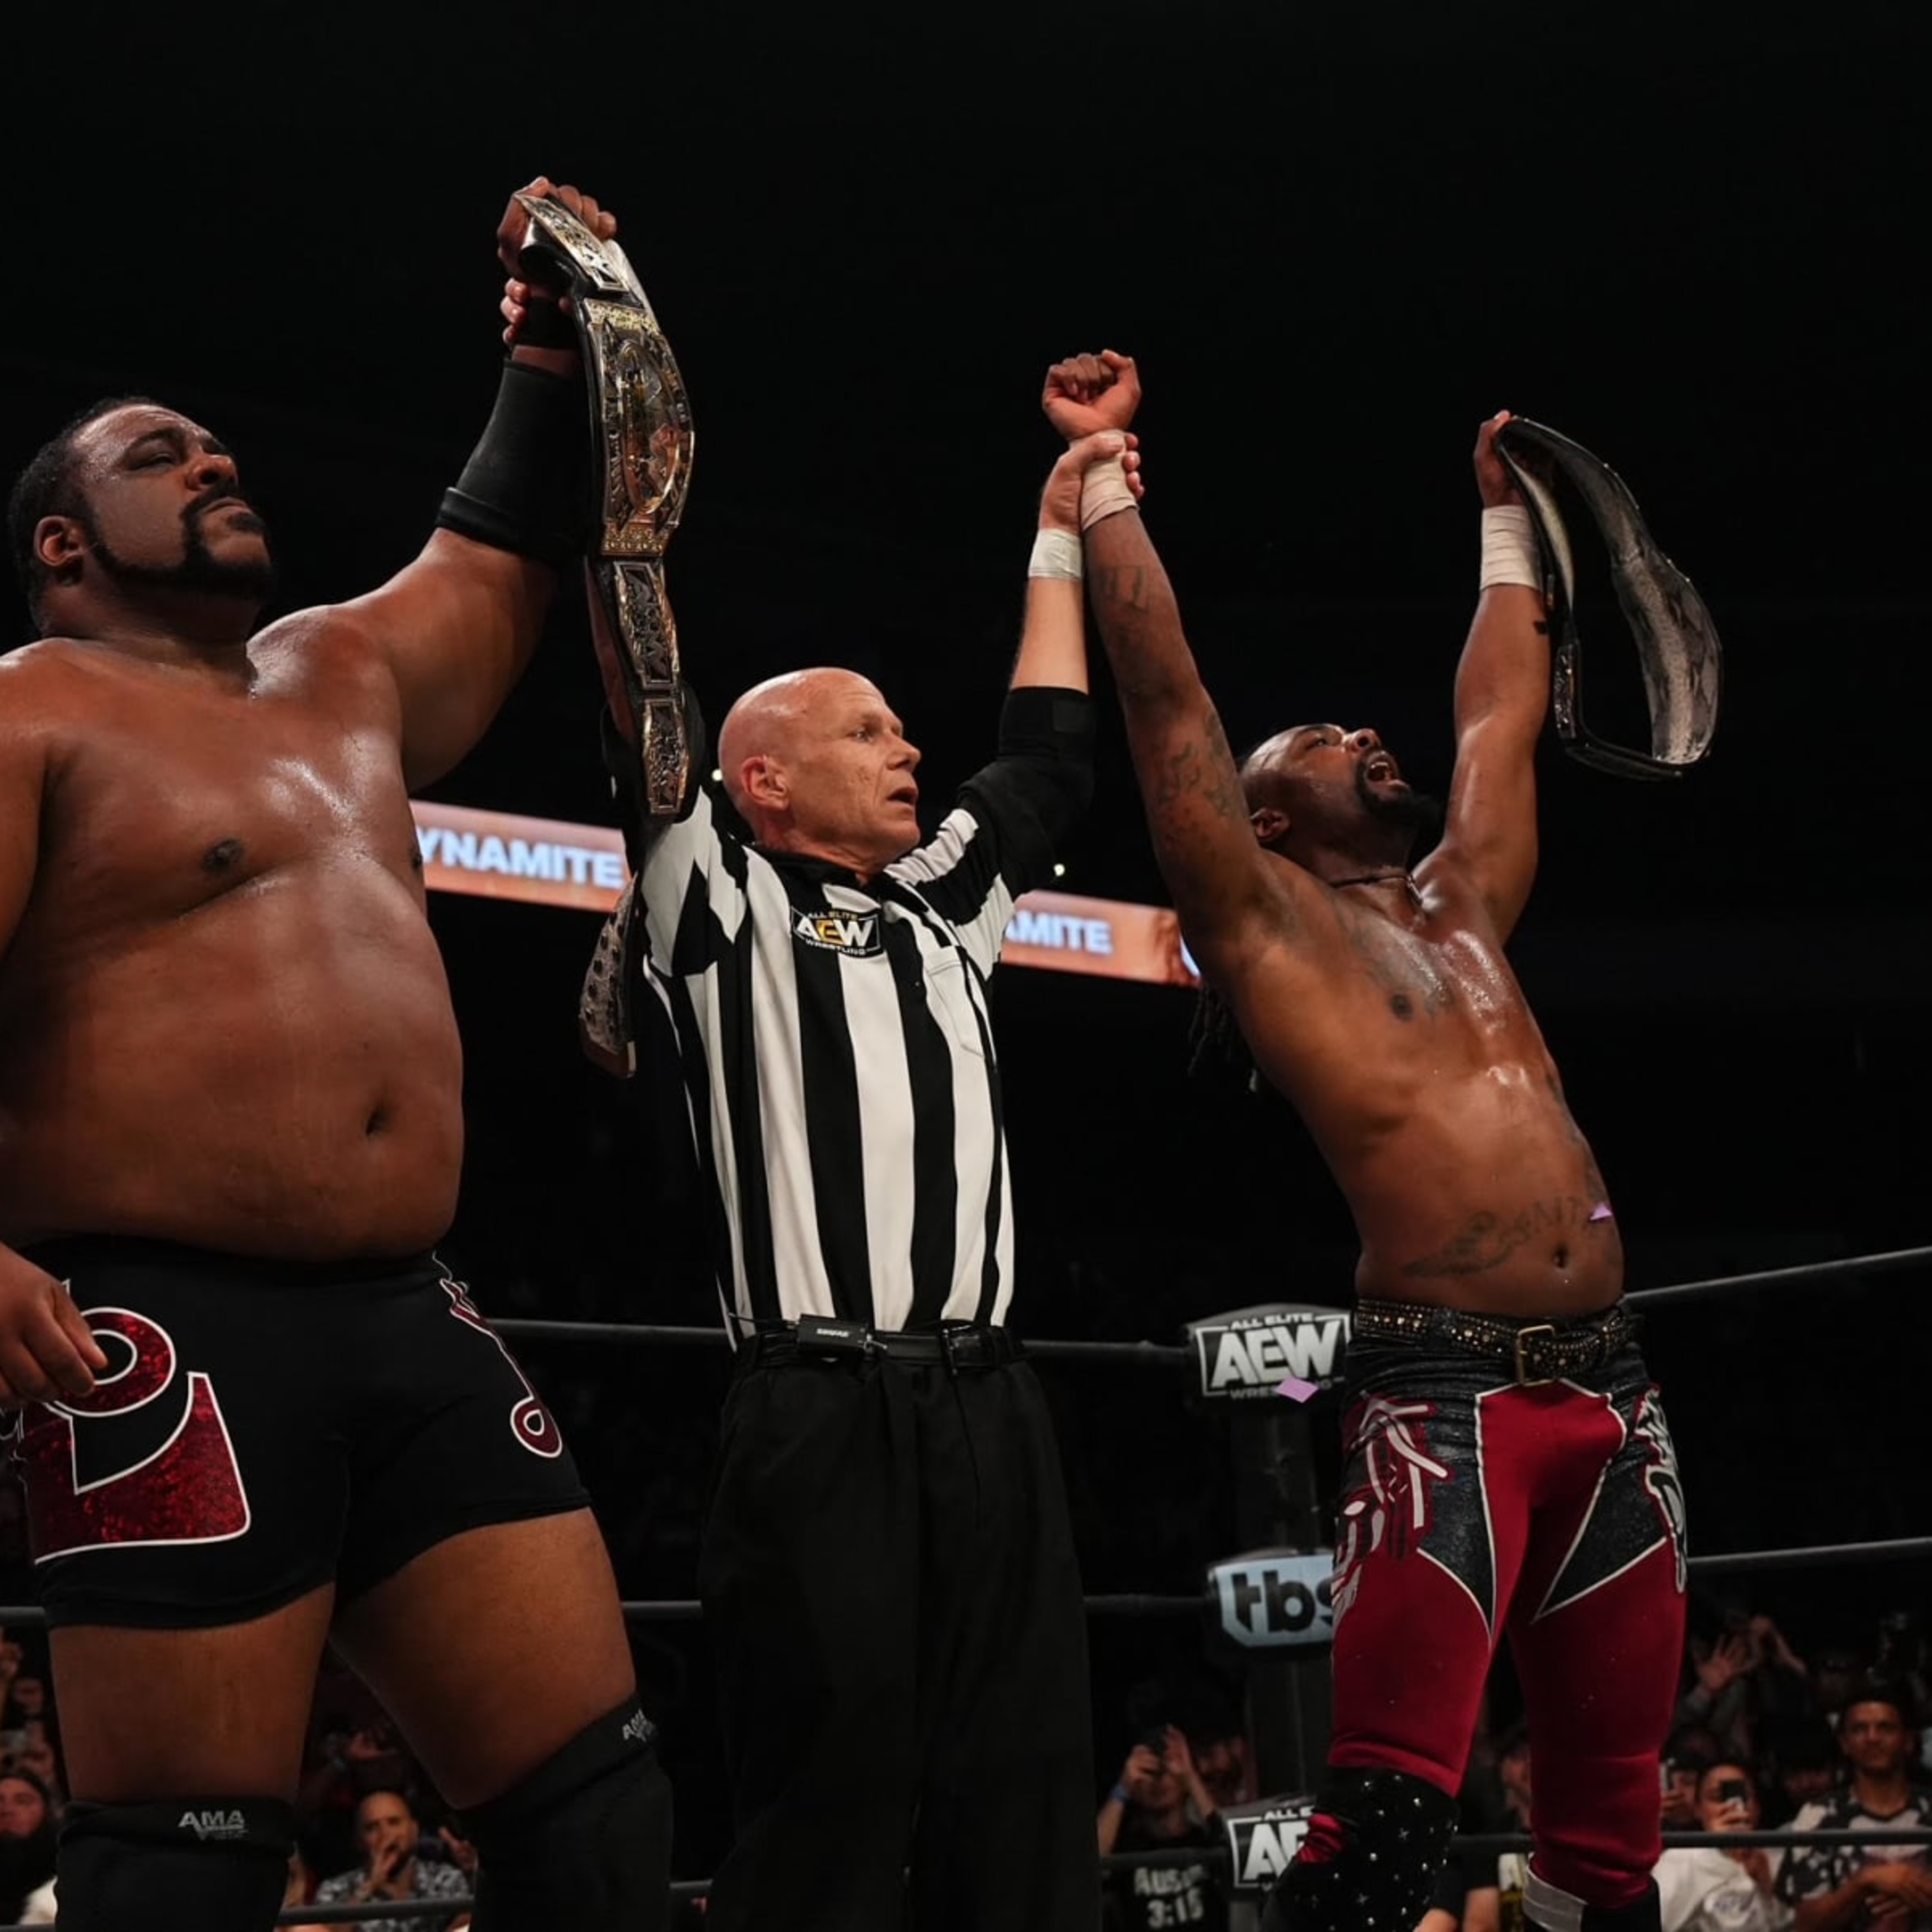 Quick Takes on AEW’s Tag Team Turmoil, Babyface Logan Paul in WWE, More